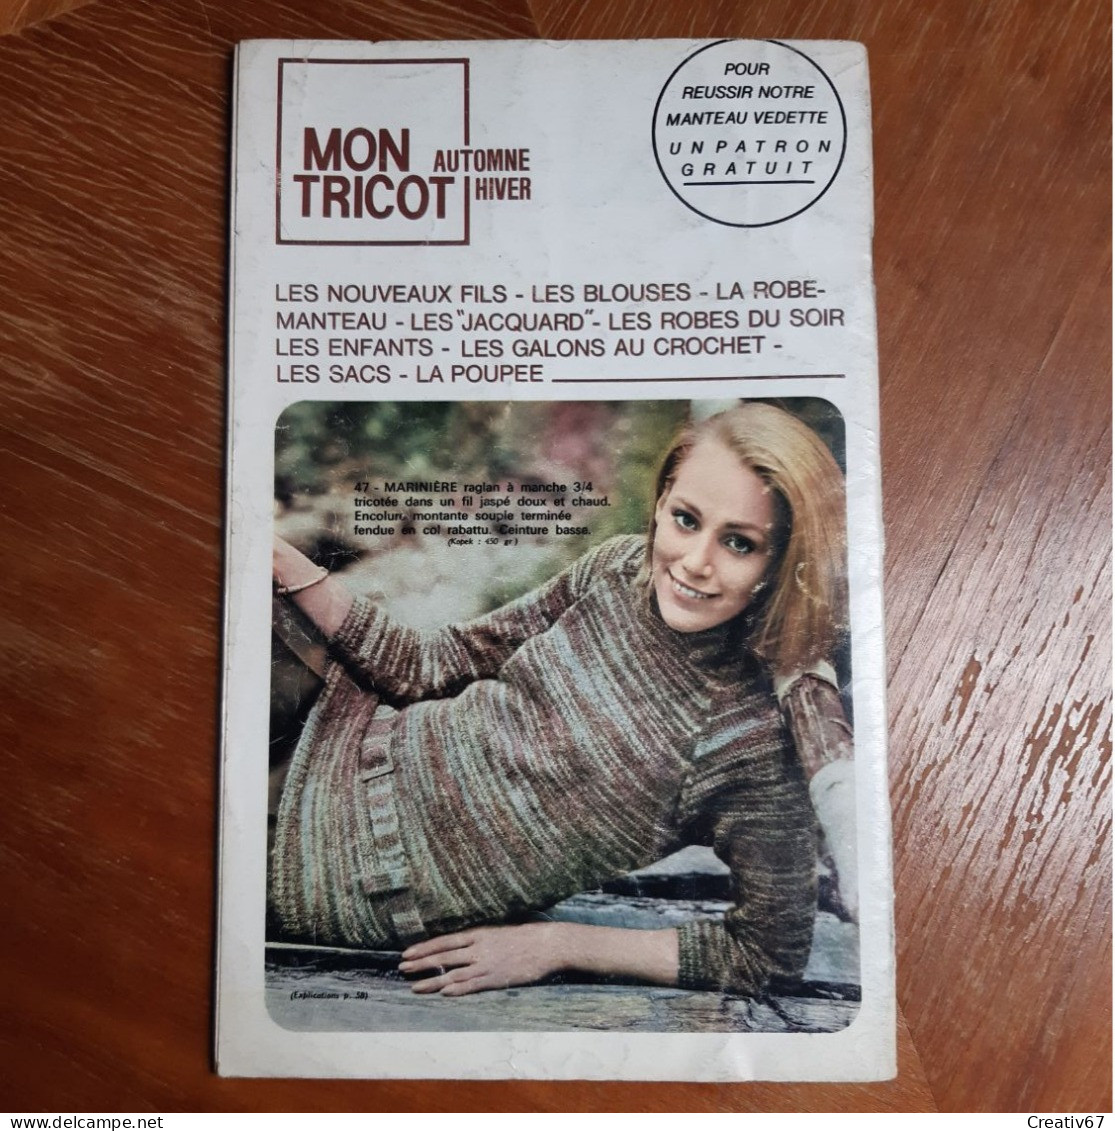 Mon Tricot 75 Edition De 1967 - Libros